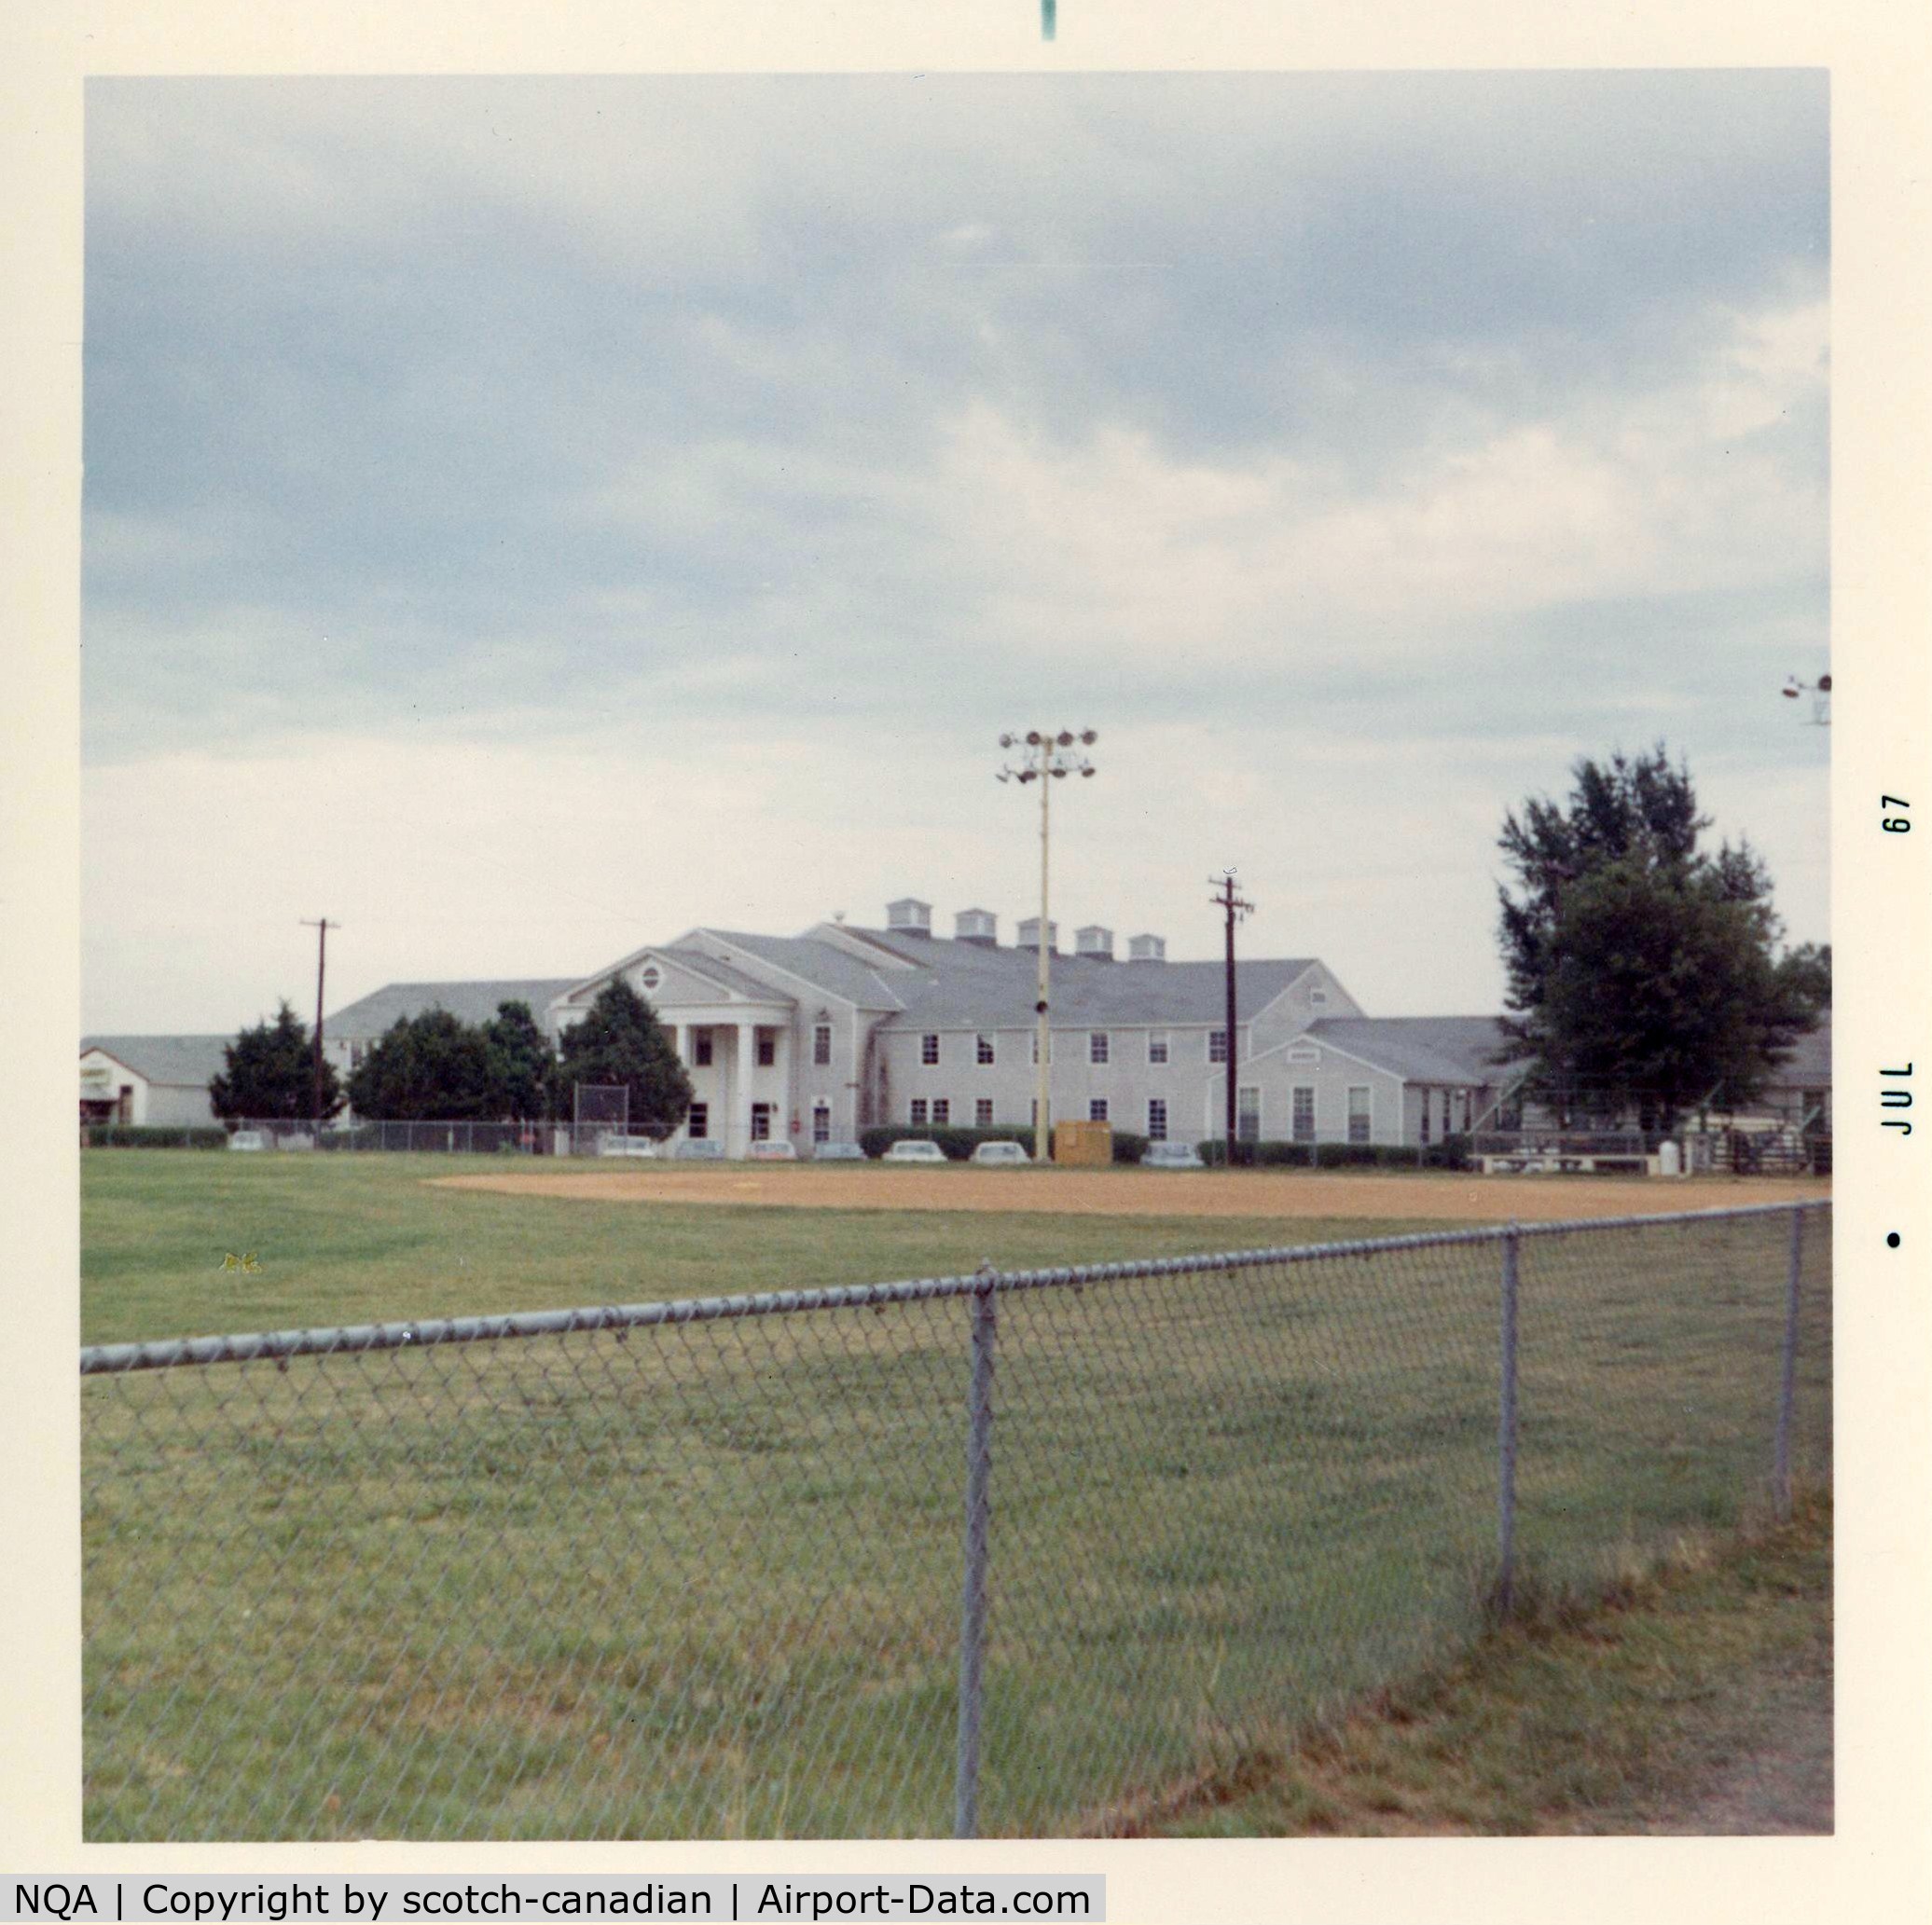 Millington Regional Jetport Airport (NQA) - Administration Building at Naval Air Station - Memphis, Millington, TN - 1967